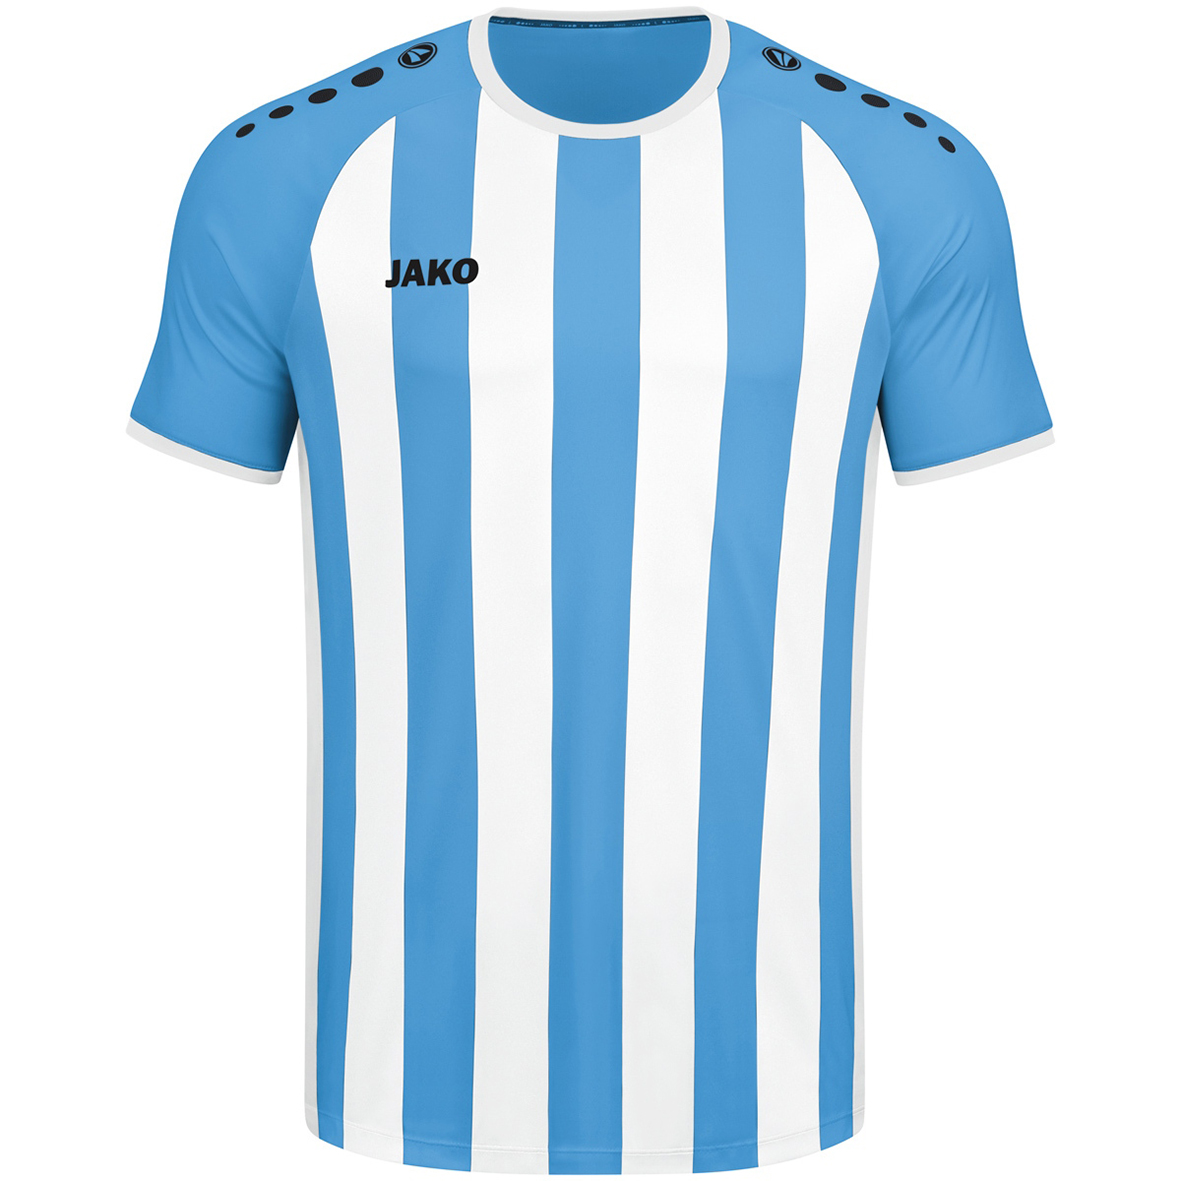 Camiseta manga corta hombre Inter azul burdeos